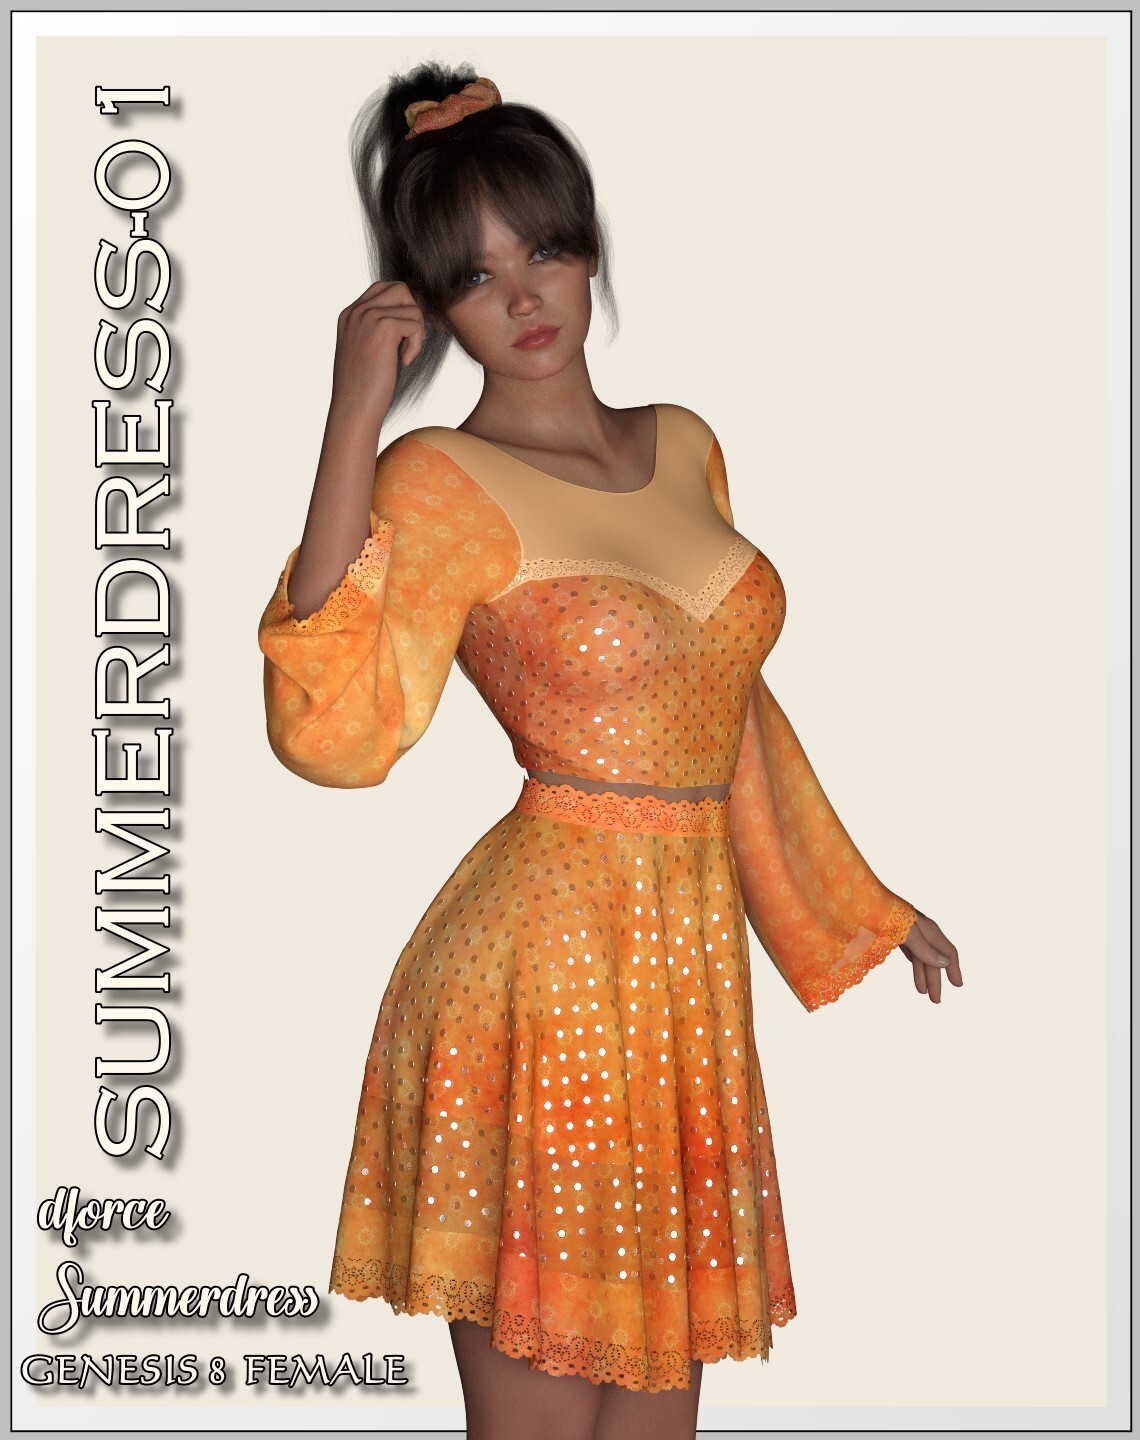 dforce-Summerdress  G8F by: LUNA3D, 3D Models by Daz 3D